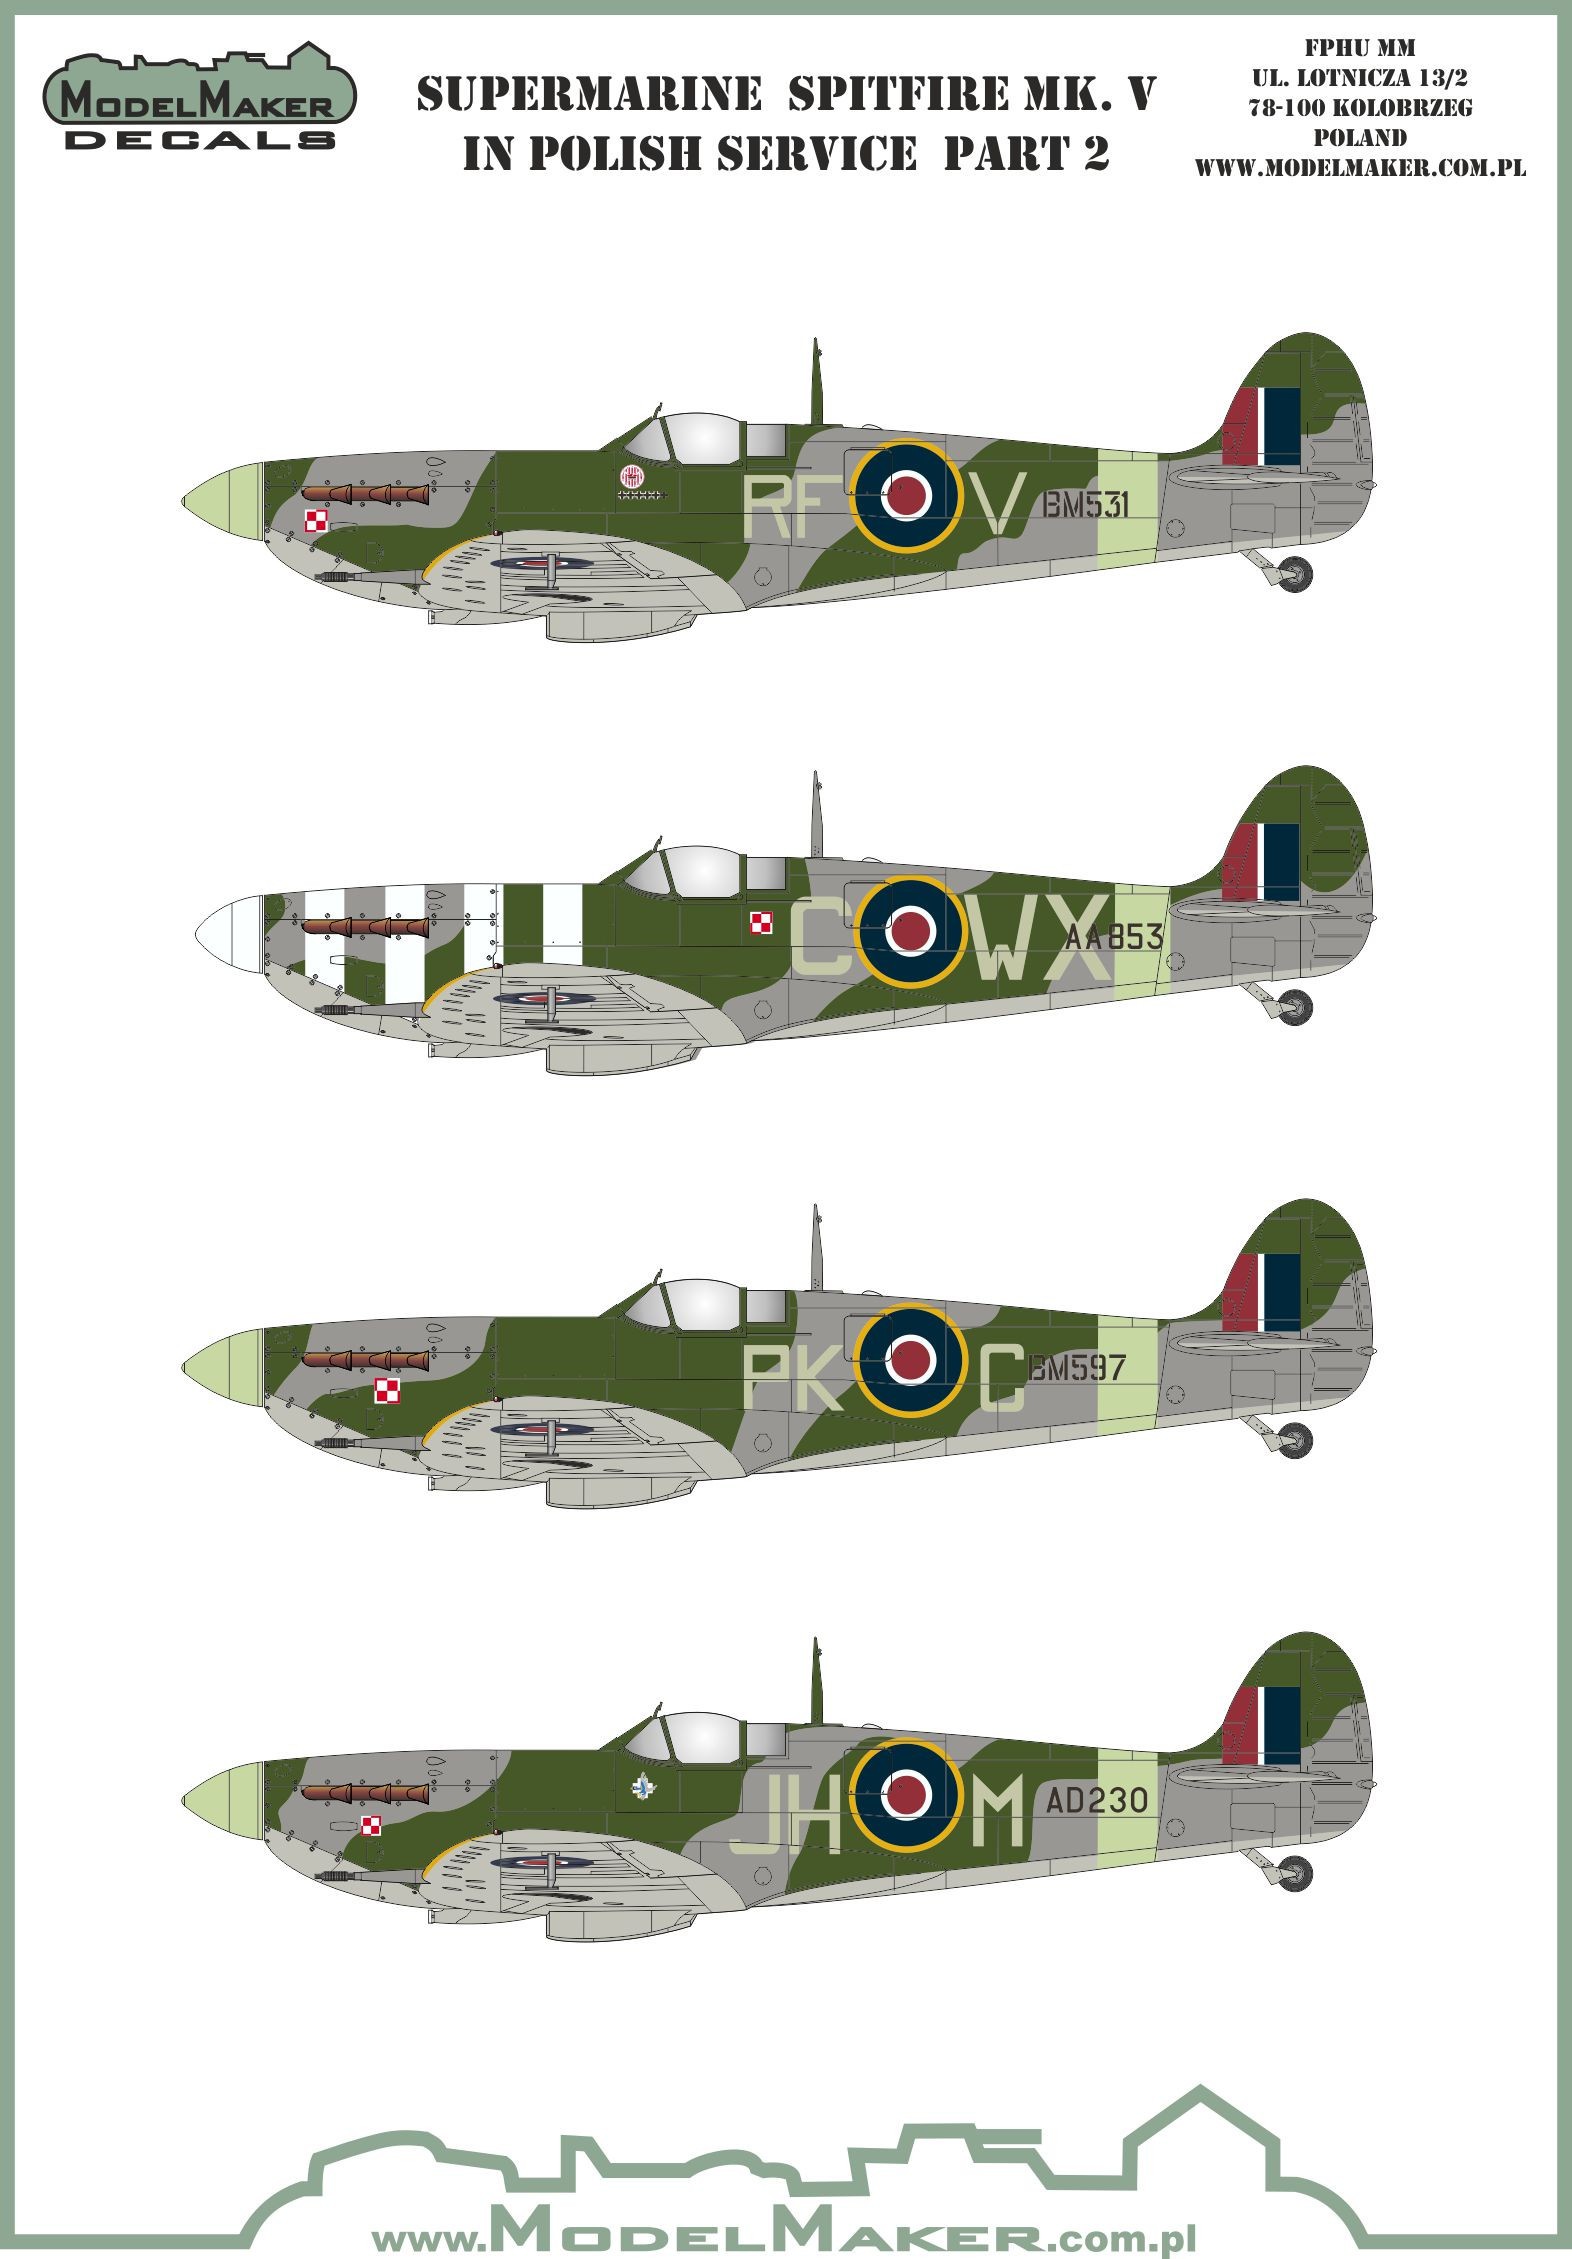  Model Maker Decals Décal Supermarine Spitfire Mk.V dans la deuxième p